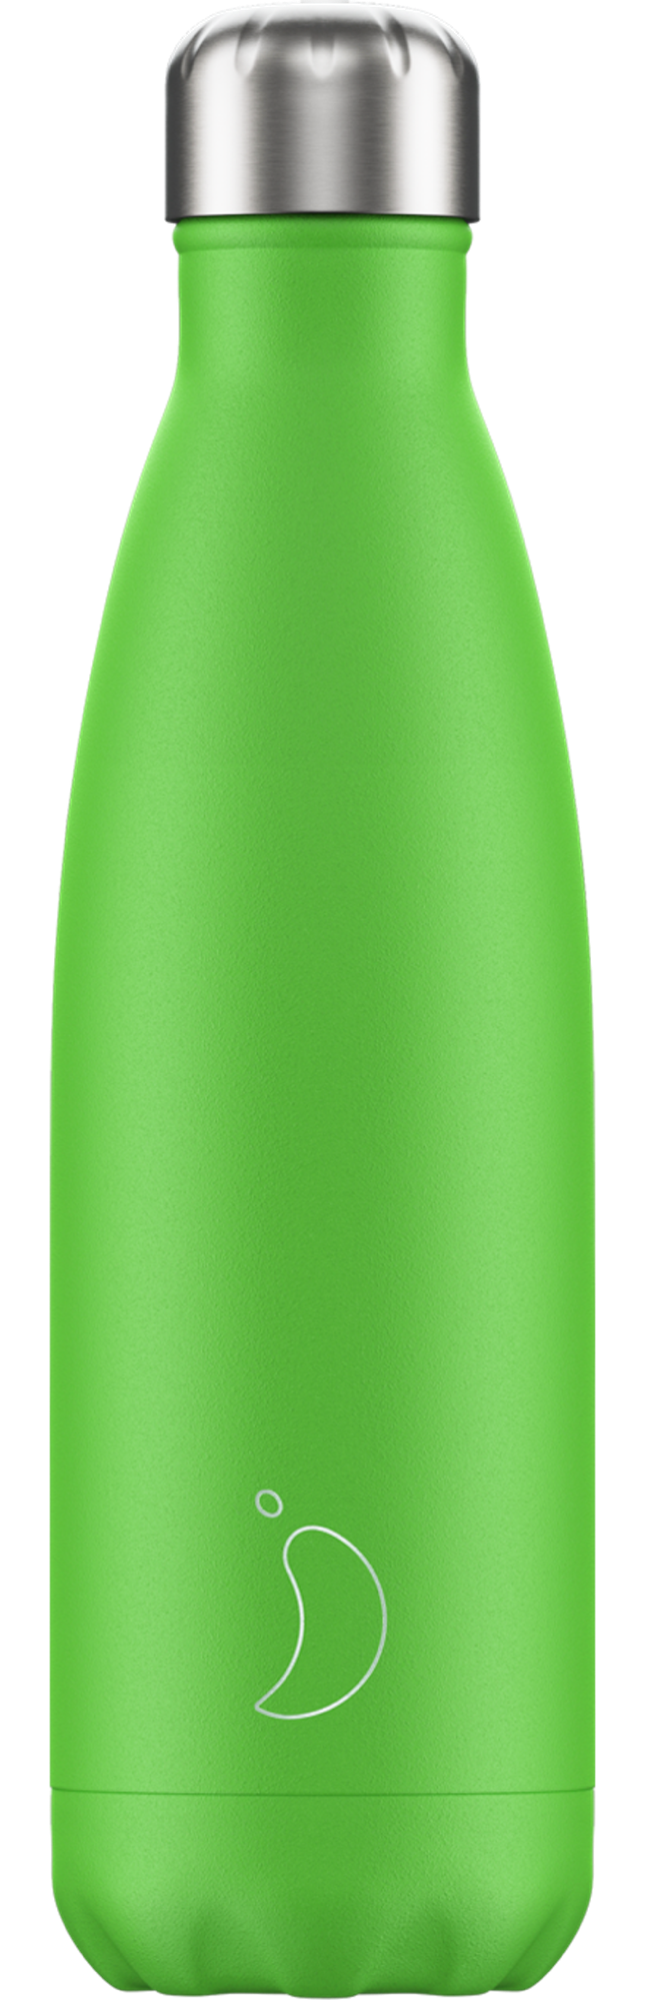 Bottle Green PNG Free File Download